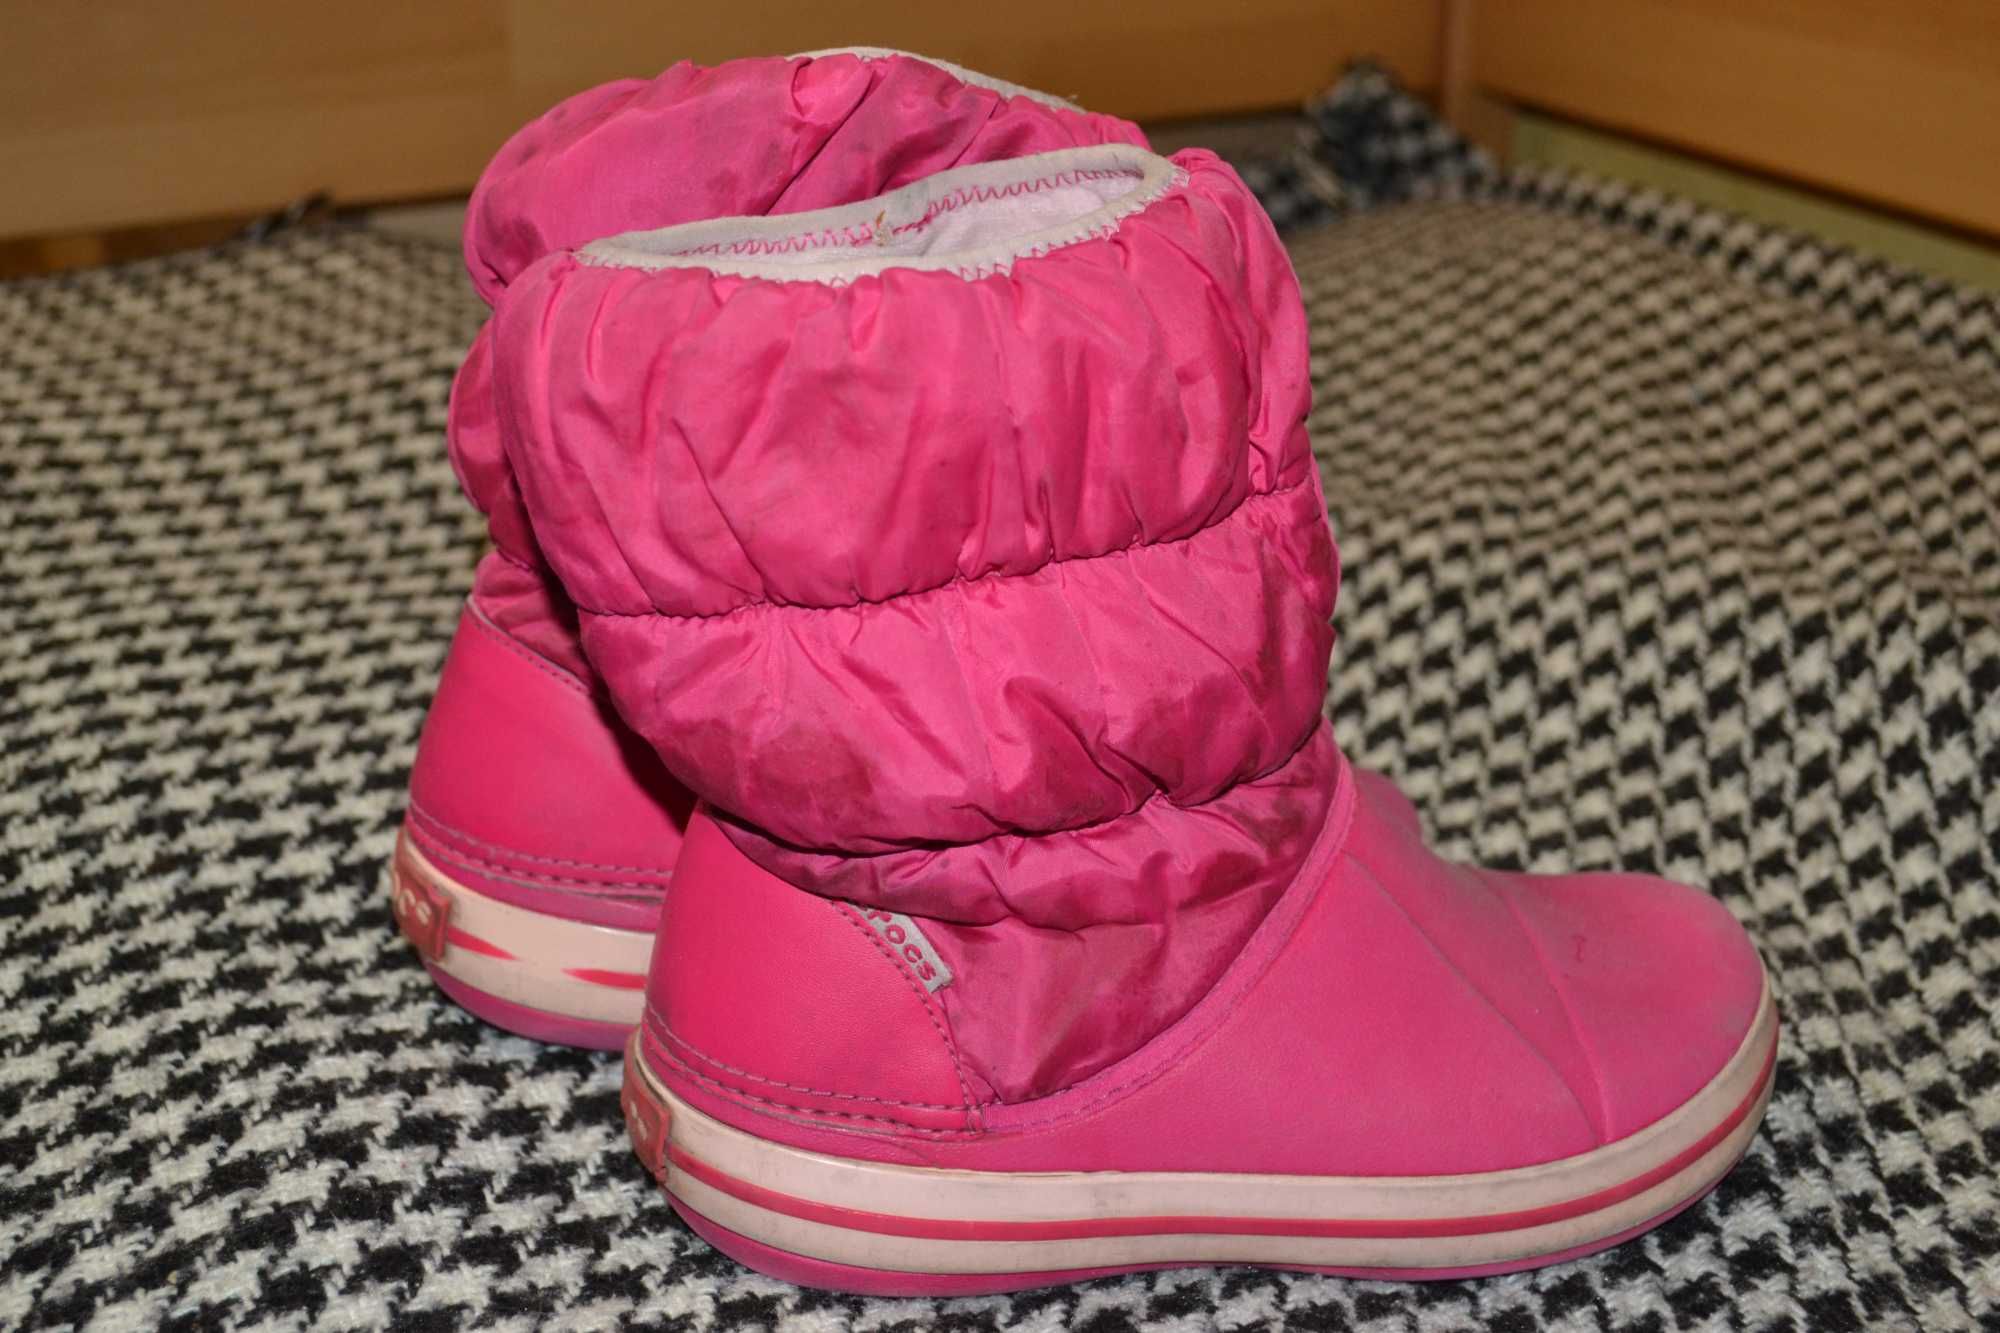 Сапоги Снегоходы CROCS
Winter Puff Boot Kids Candy Pink